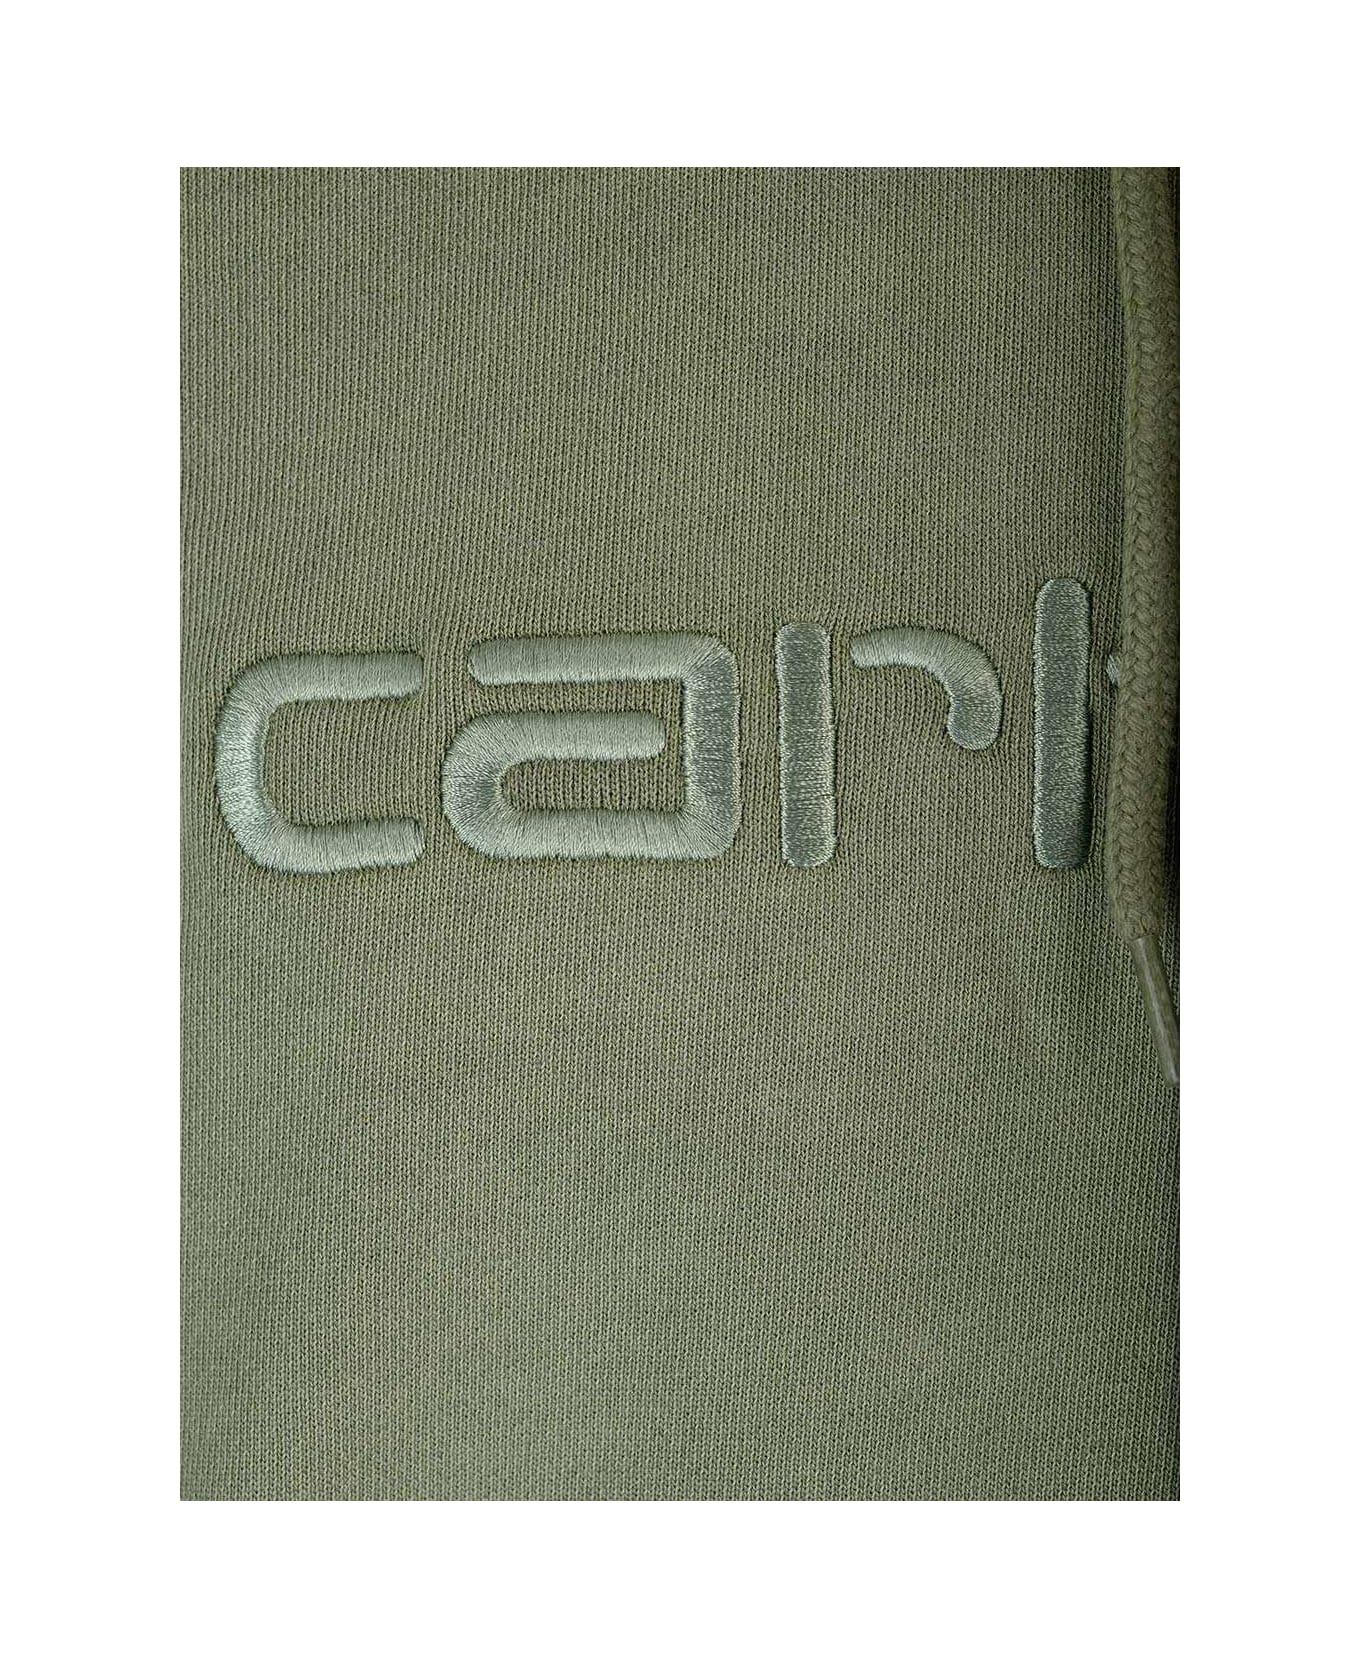 Carhartt Cotton Hooded Sweatshirt - Military フリース